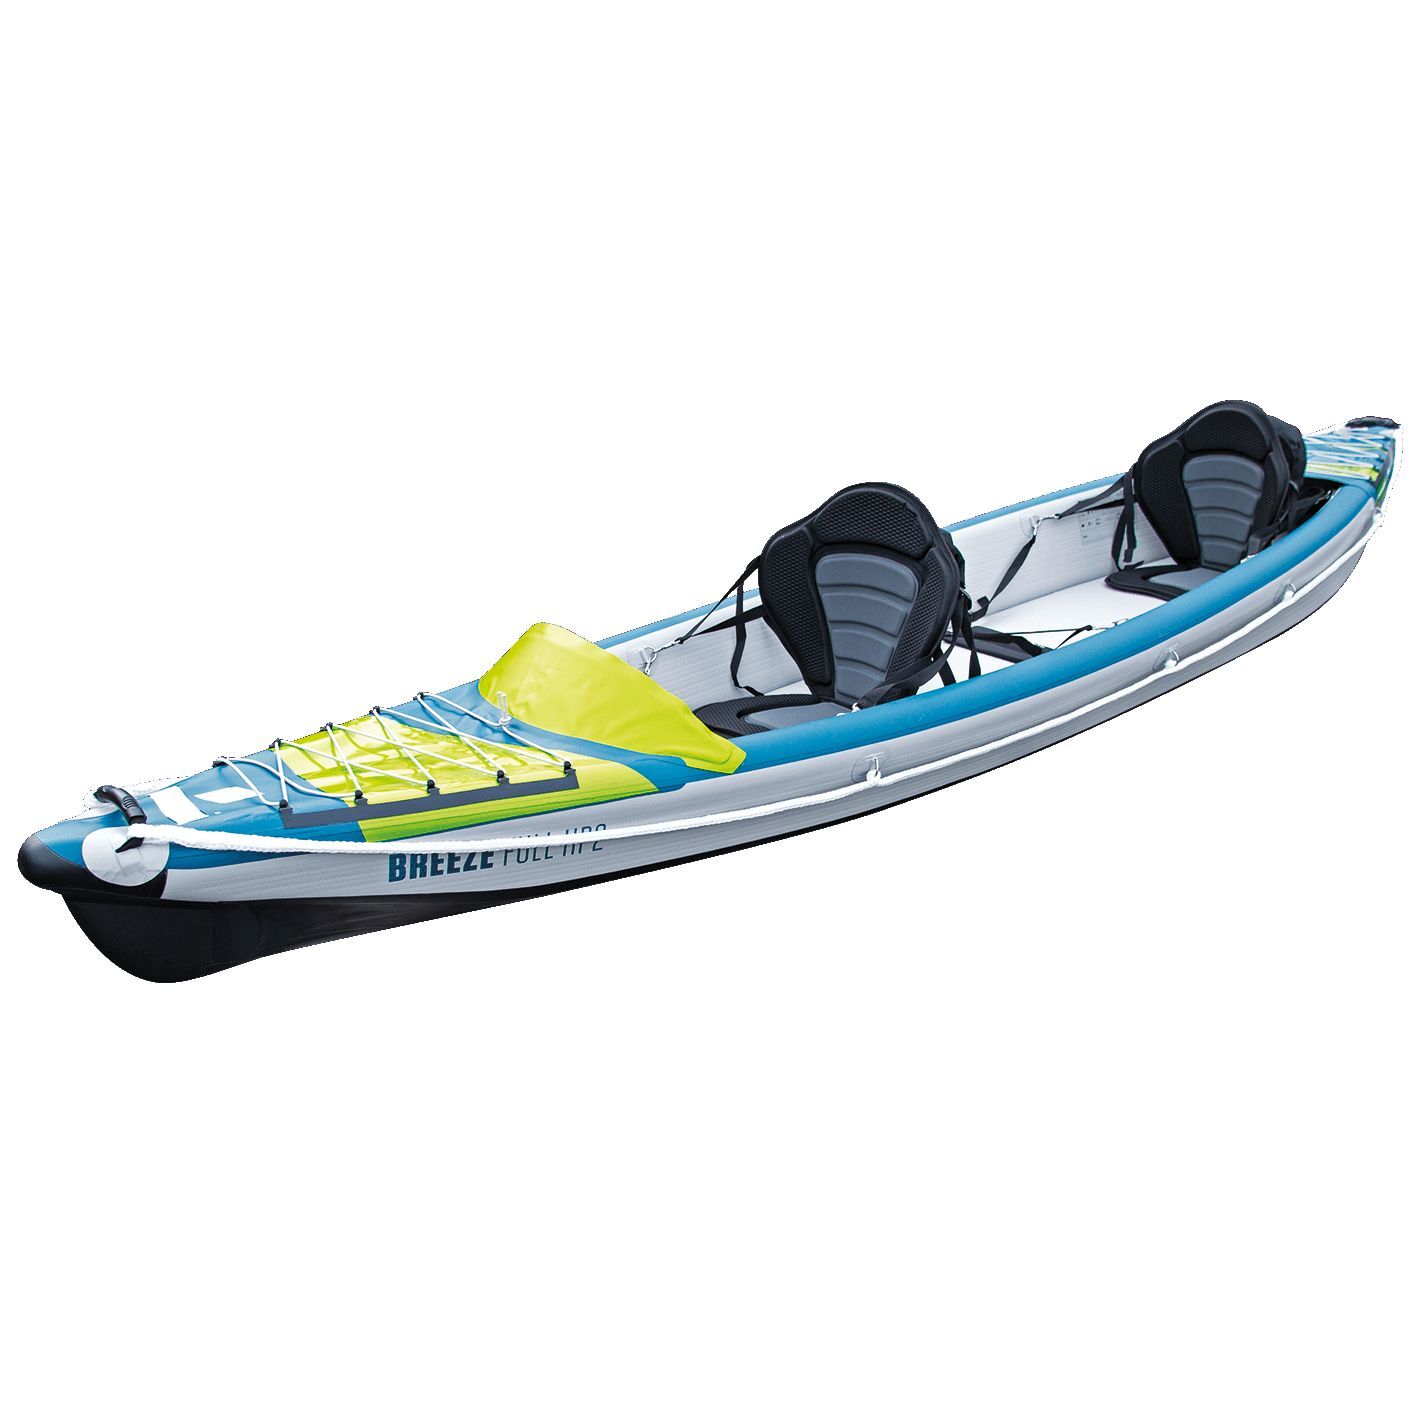 Extracto Sudamerica pulgar Tahe Outdoor Kayak Air Breeze Full Hp2 - Kayak hinchable